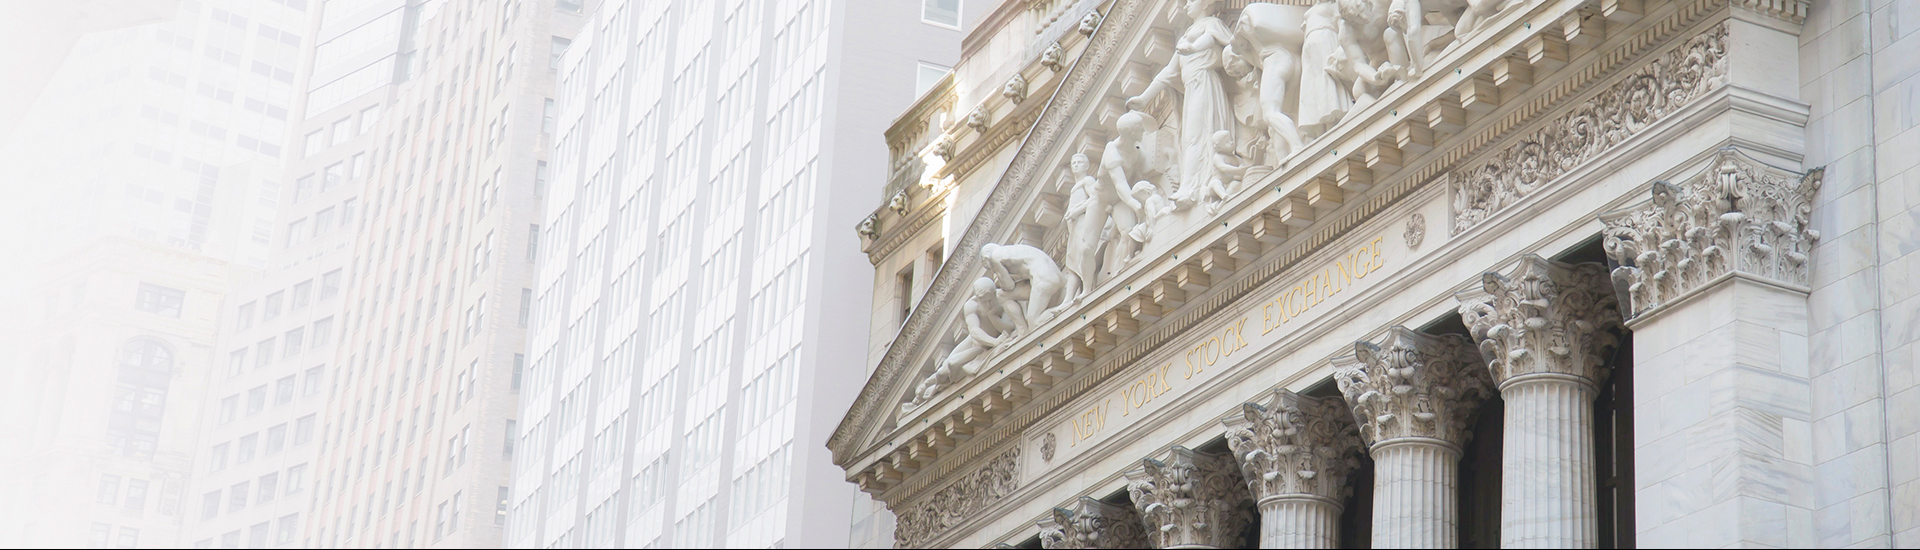 facade of the New York Stock Exchange